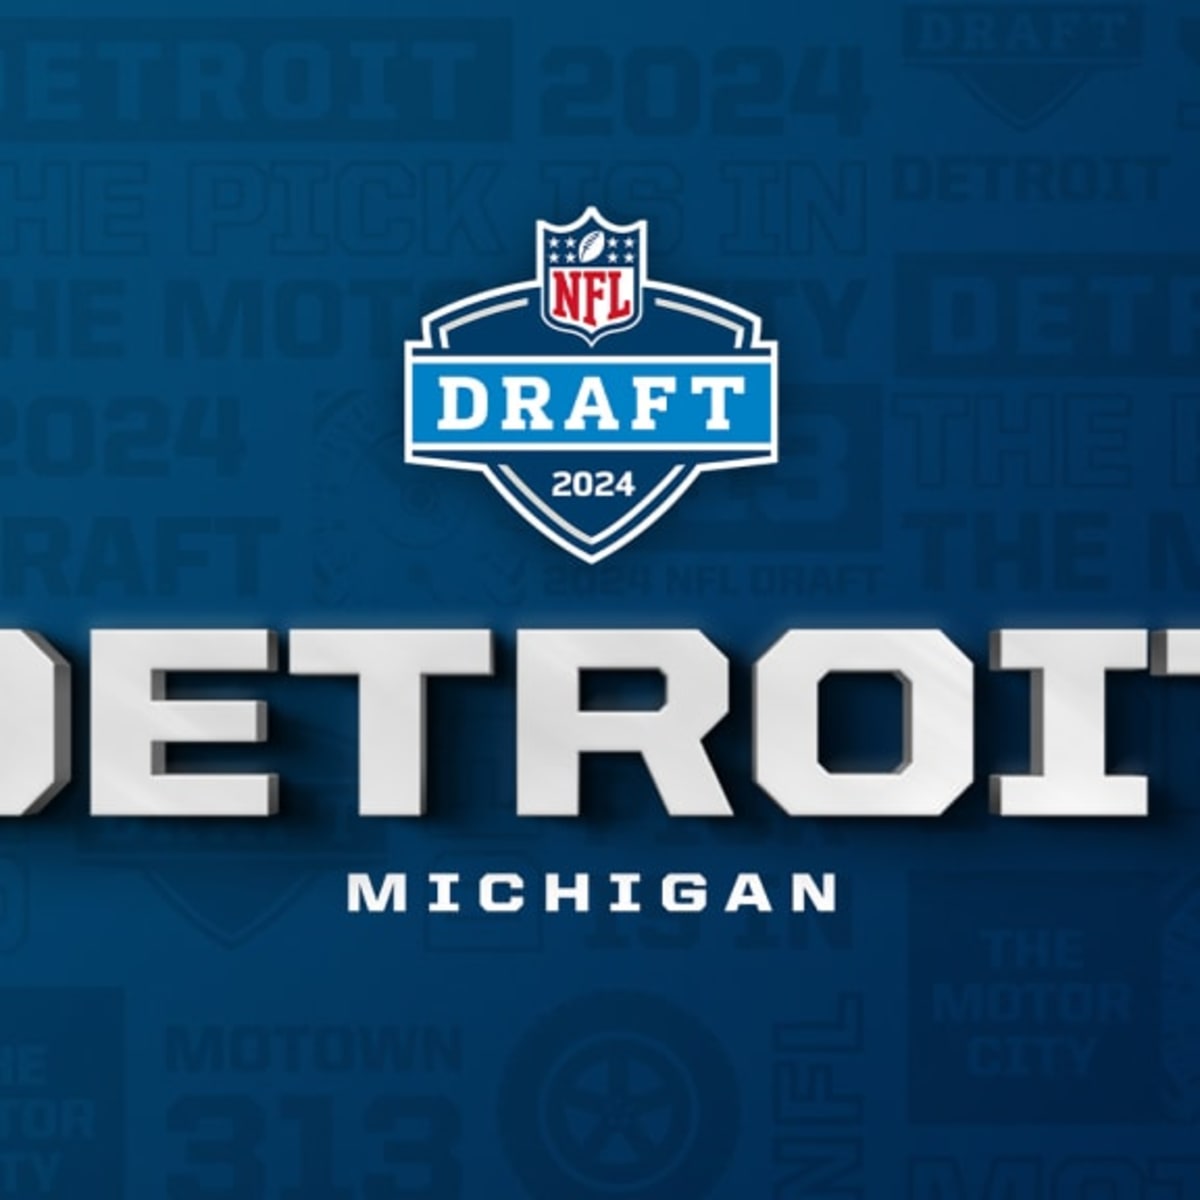 Detroit to Host 2024 NFL Draft - Visit NFL Draft on Sports